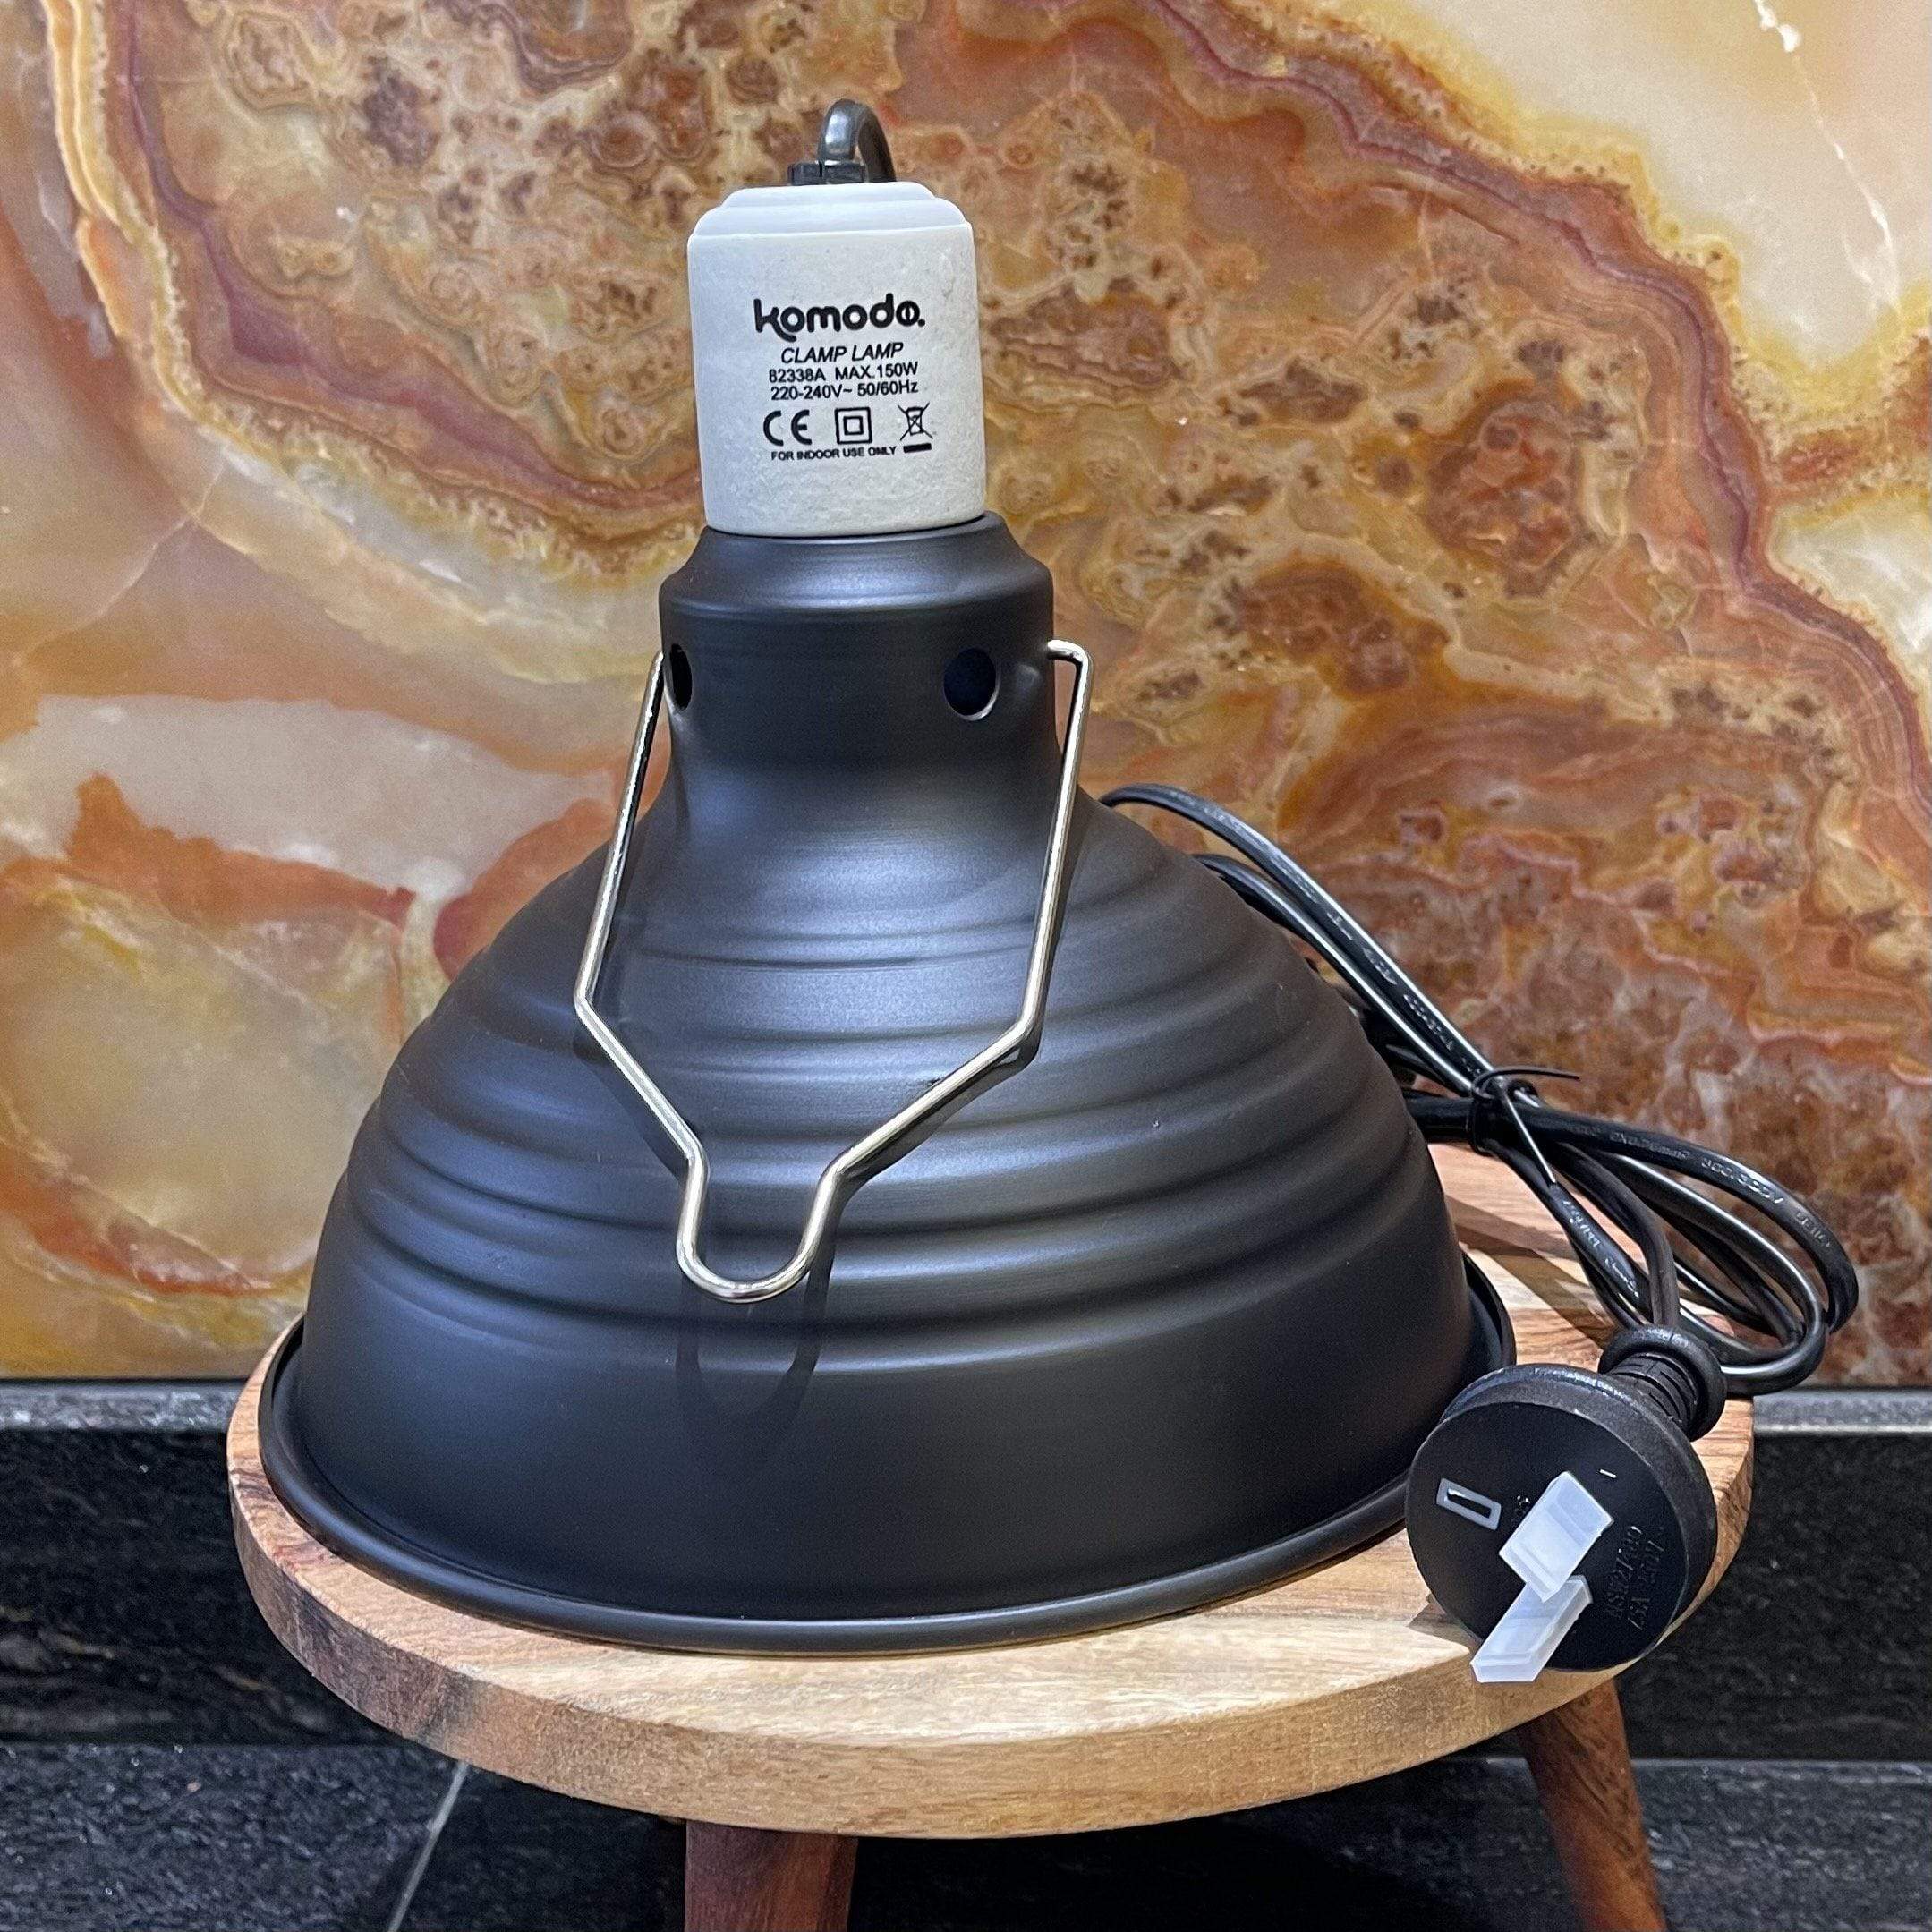 Komodo Light & Heat Komodo Aluminium Reflector Dome 150W (19x21x21cm)